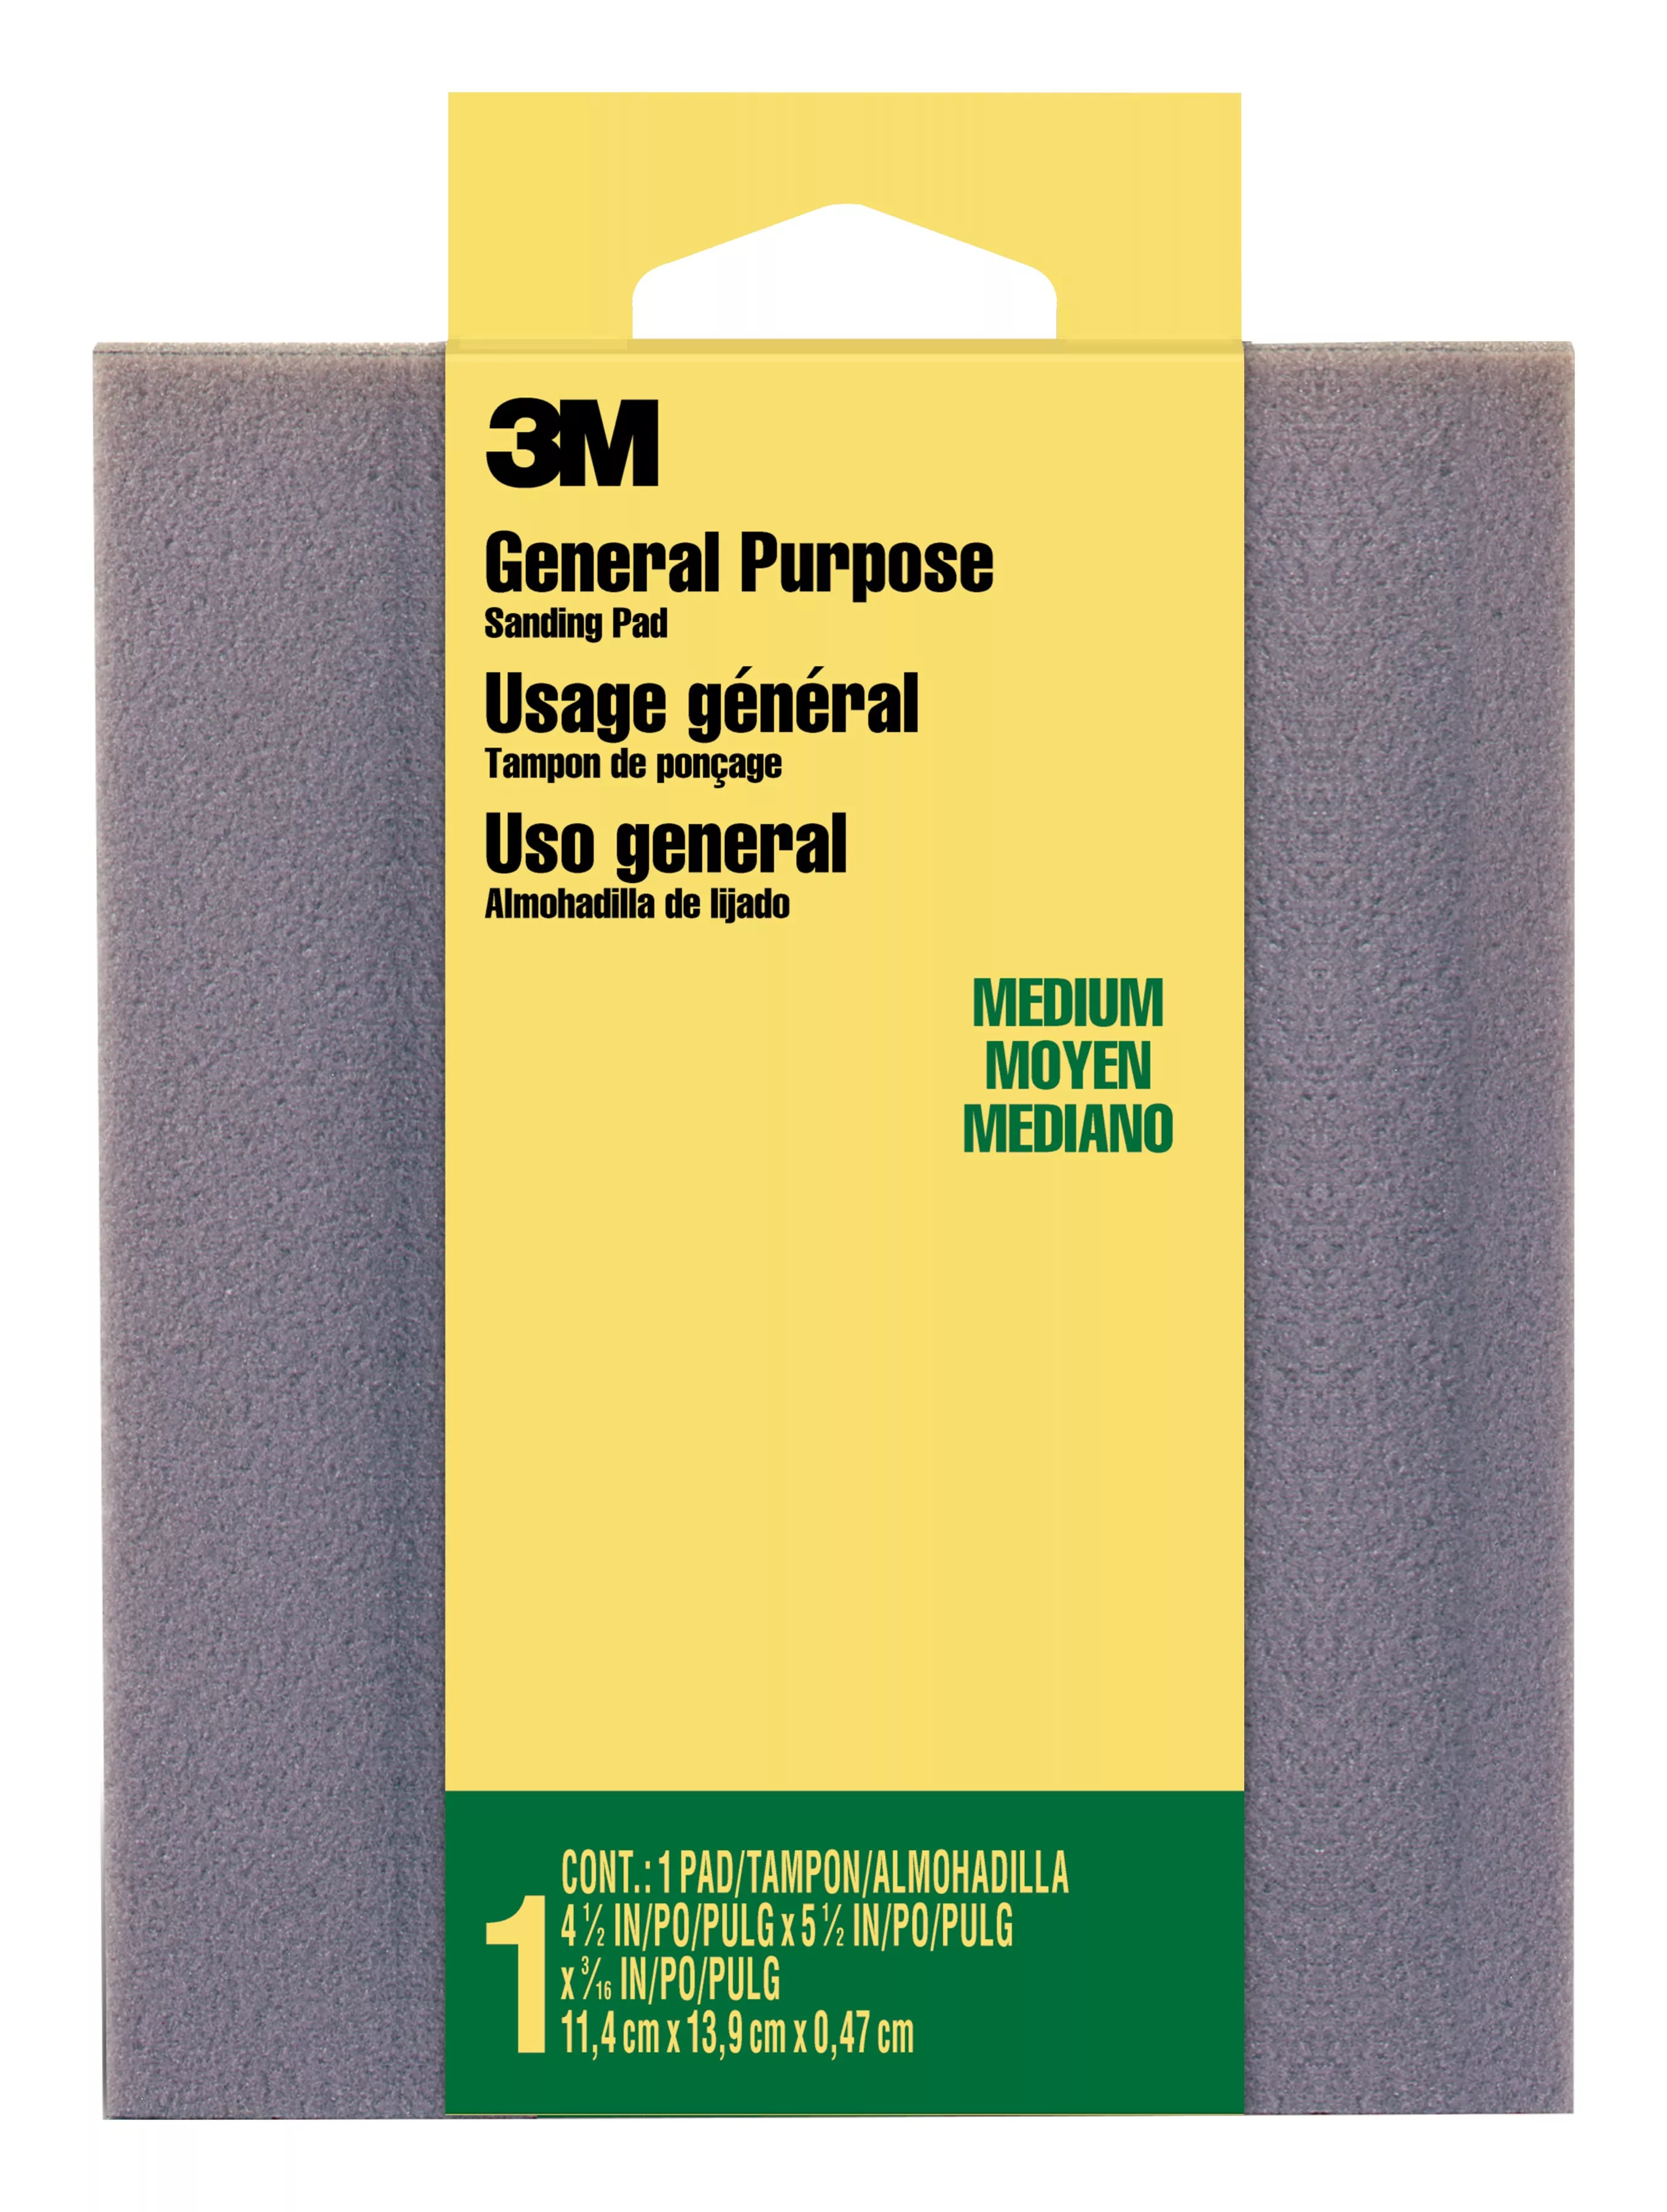 3M™ General Purpose Sanding Pad 918DC-NA, 4 1/2 in x 5 1/2 in x 3/16 in, Medium, 1/pk 24 pks/cs